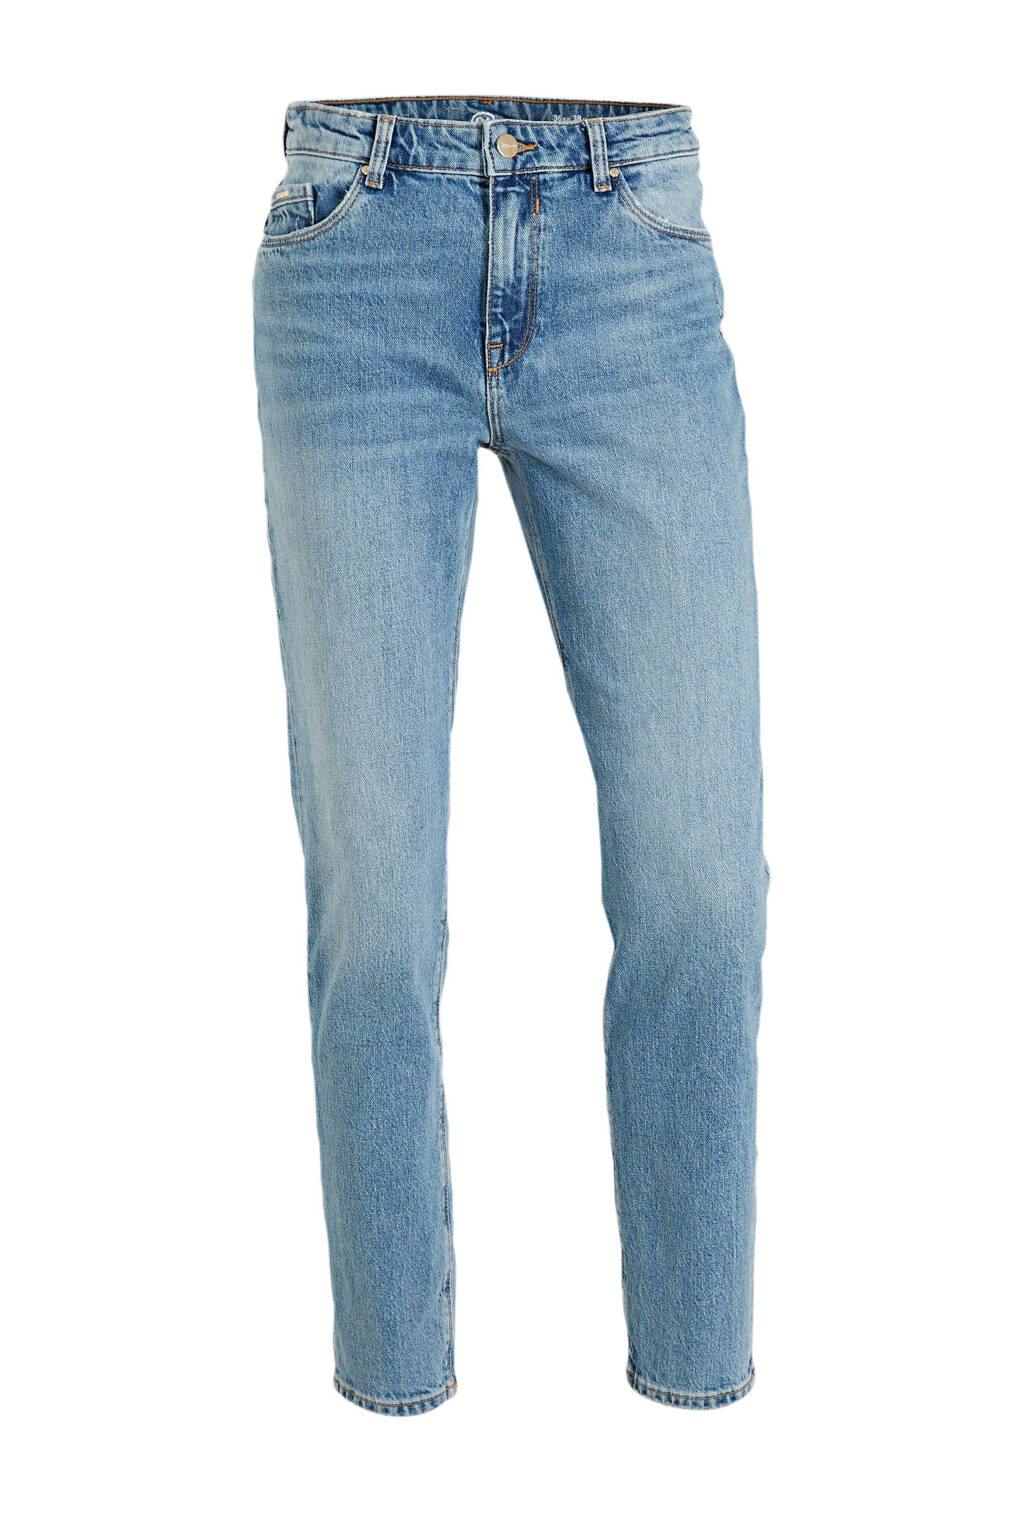 C&A The Denim straight fit jeans light denim stonewashed